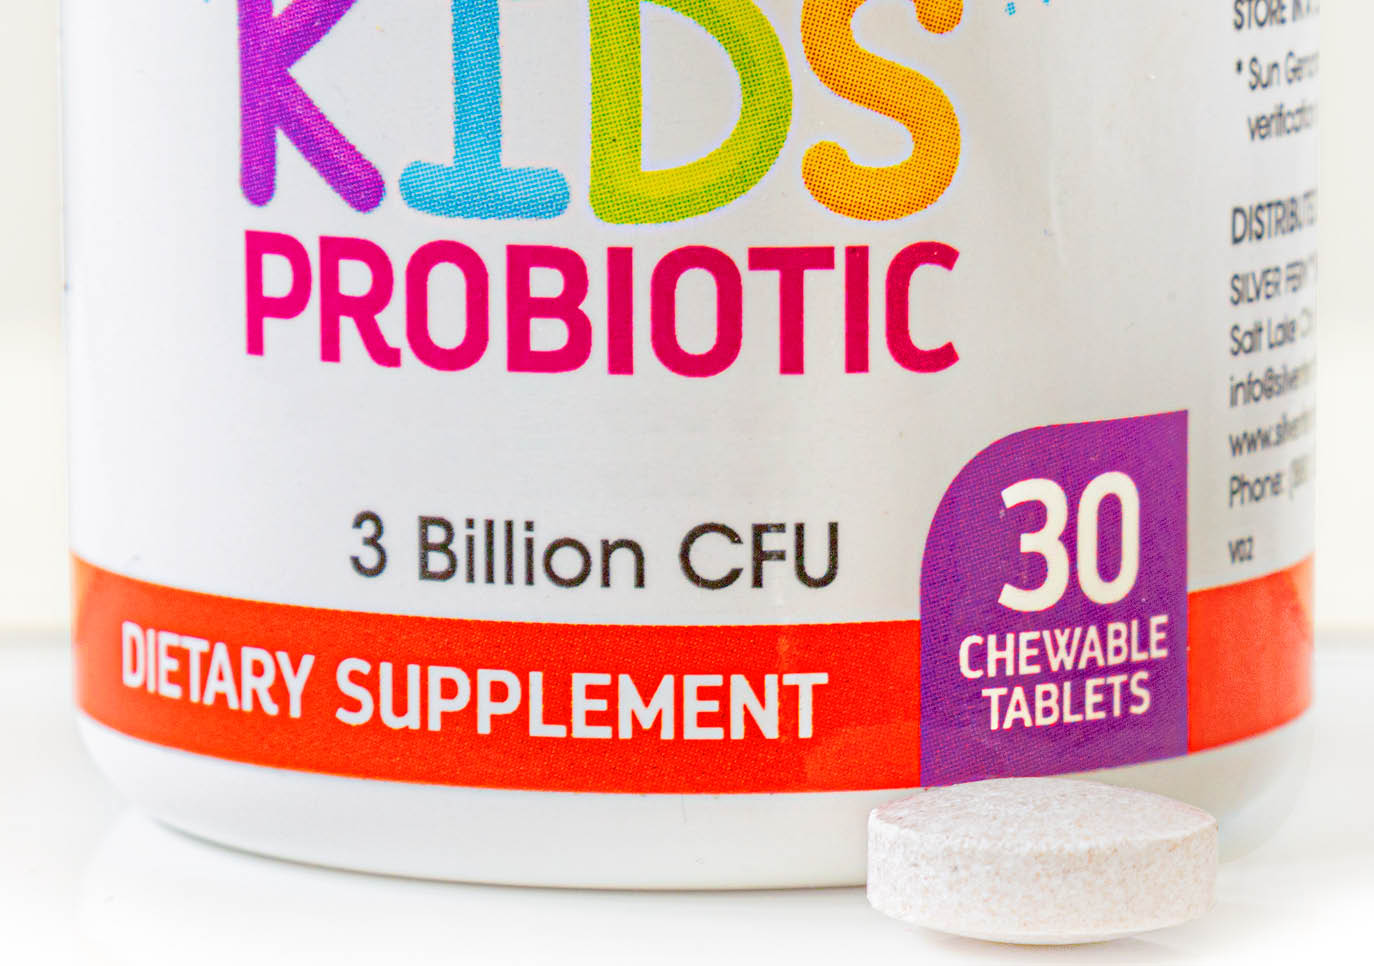 Kids Probiotic Supplement - 30 Chewable Tablets